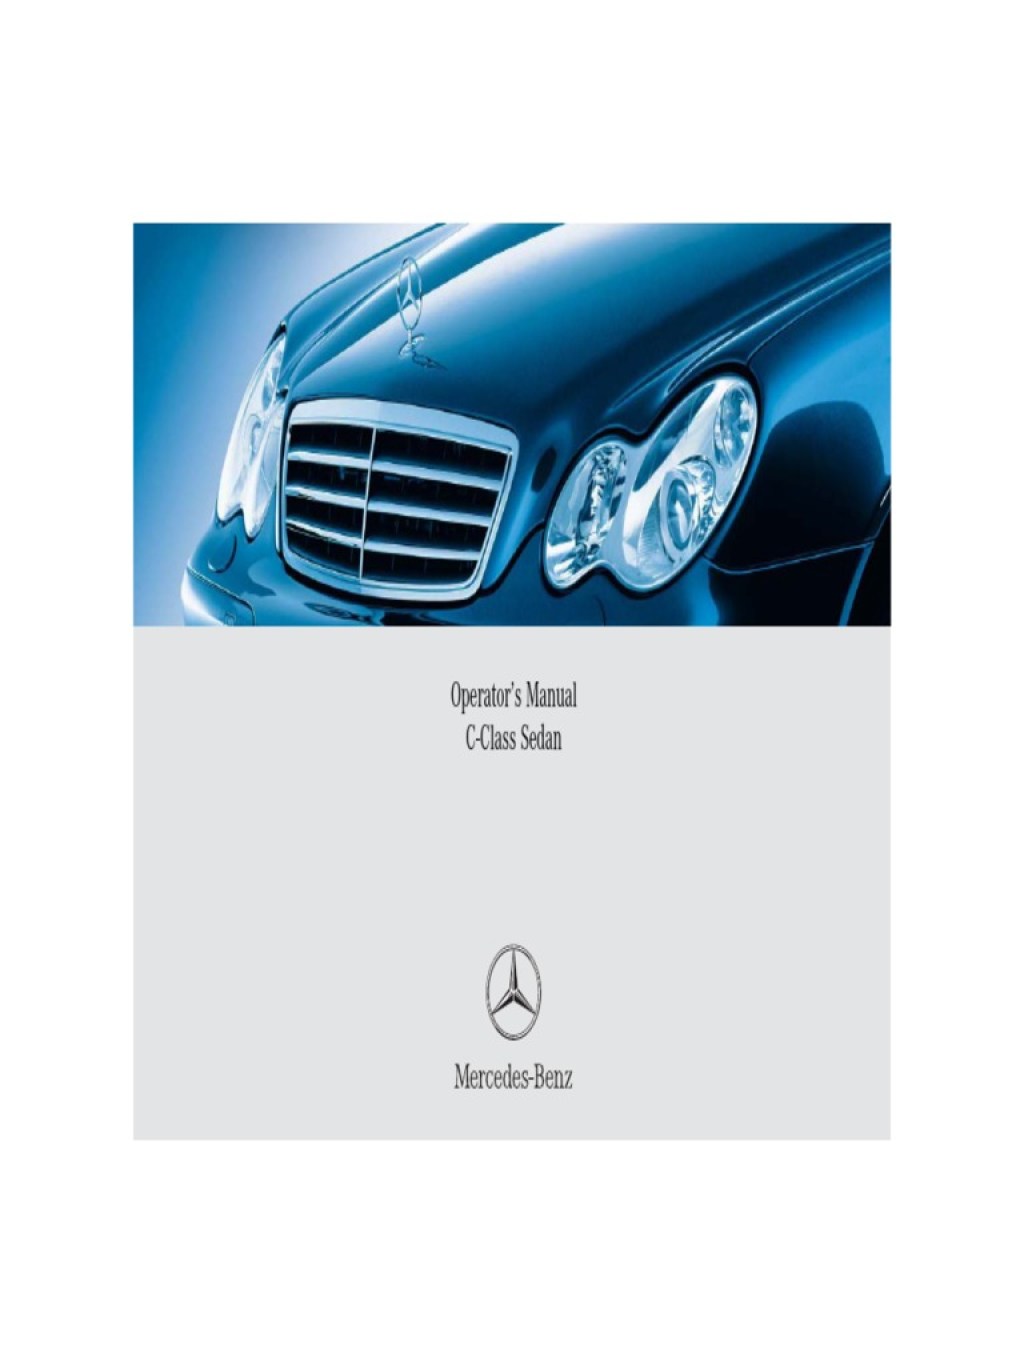 2003 mercedes benz s430 4matic owners manual - Mercedes C CLass W Users Manual  PDF